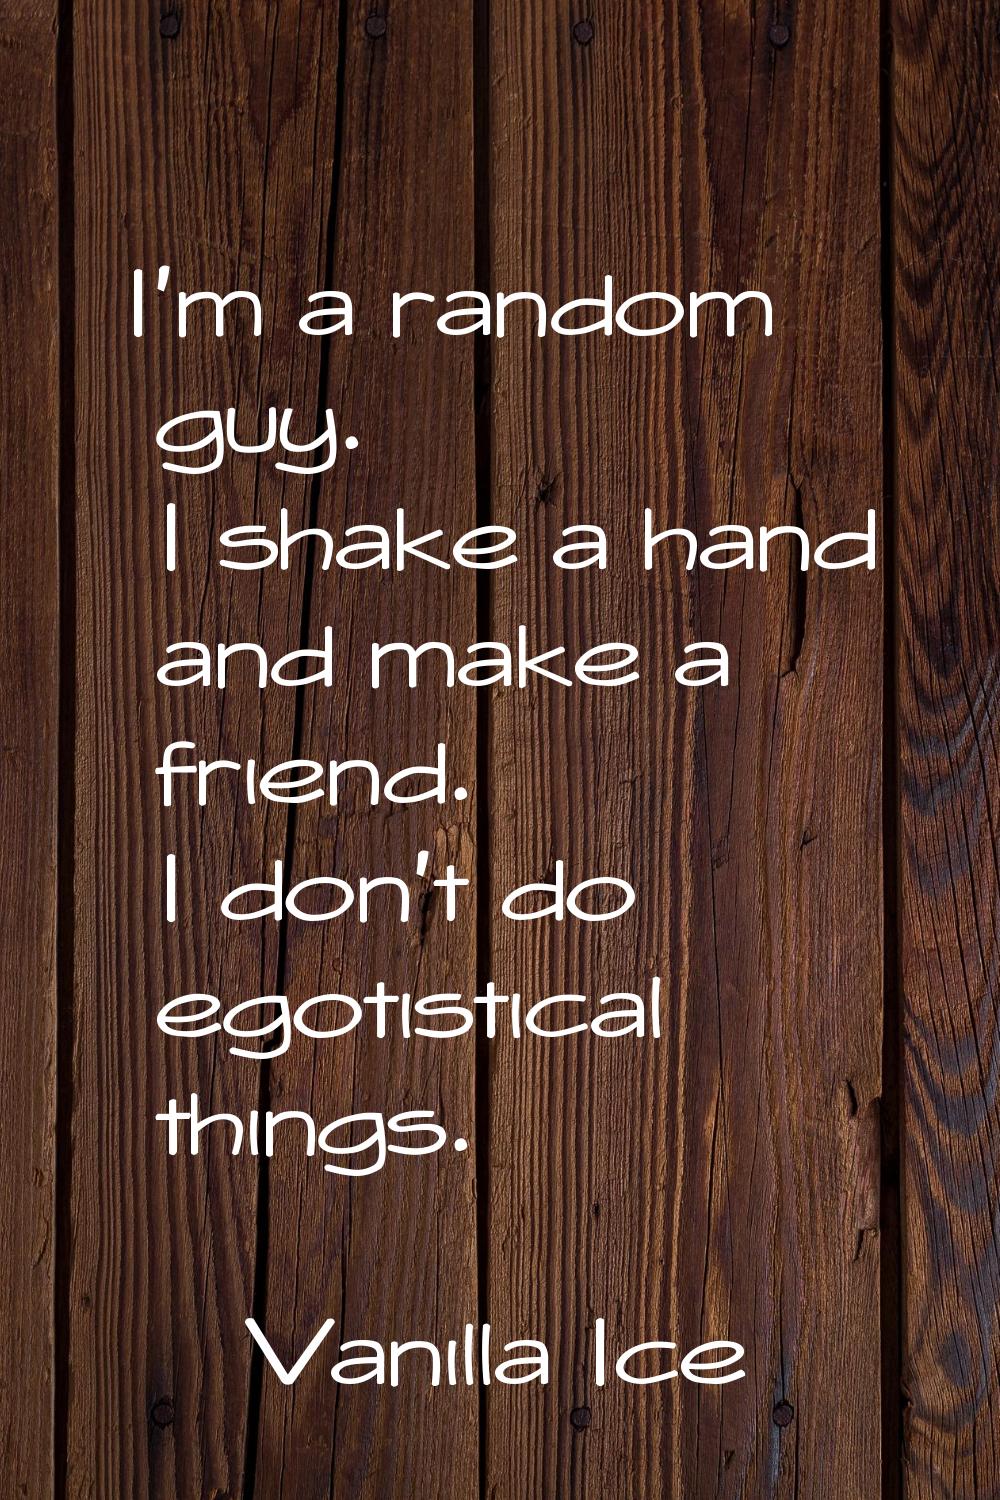 I'm a random guy. I shake a hand and make a friend. I don't do egotistical things.